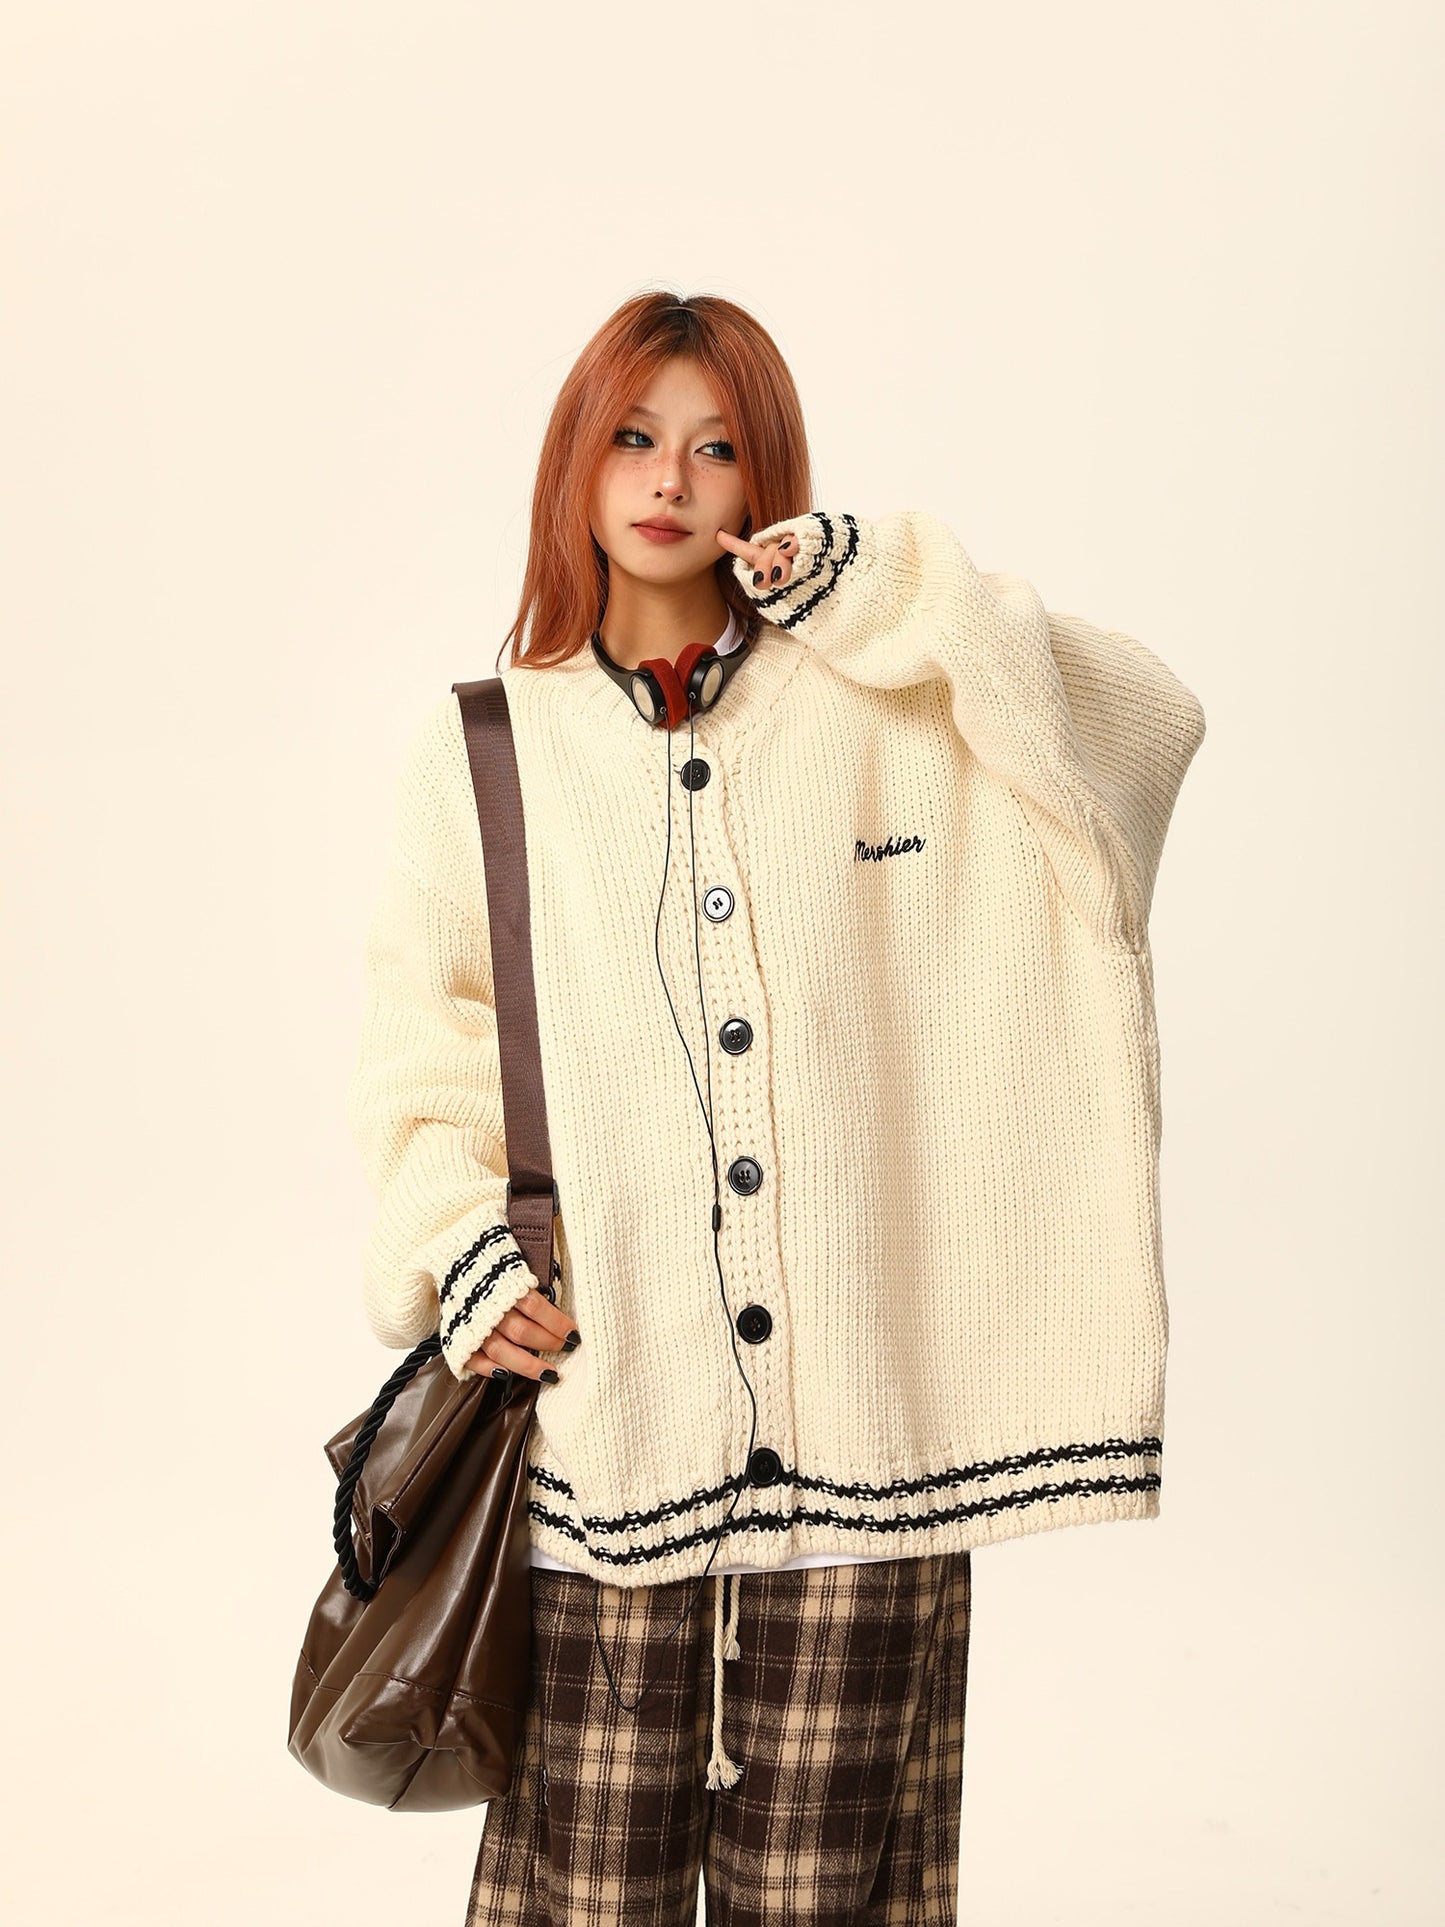 American Cardigan Knit Sweater Coat